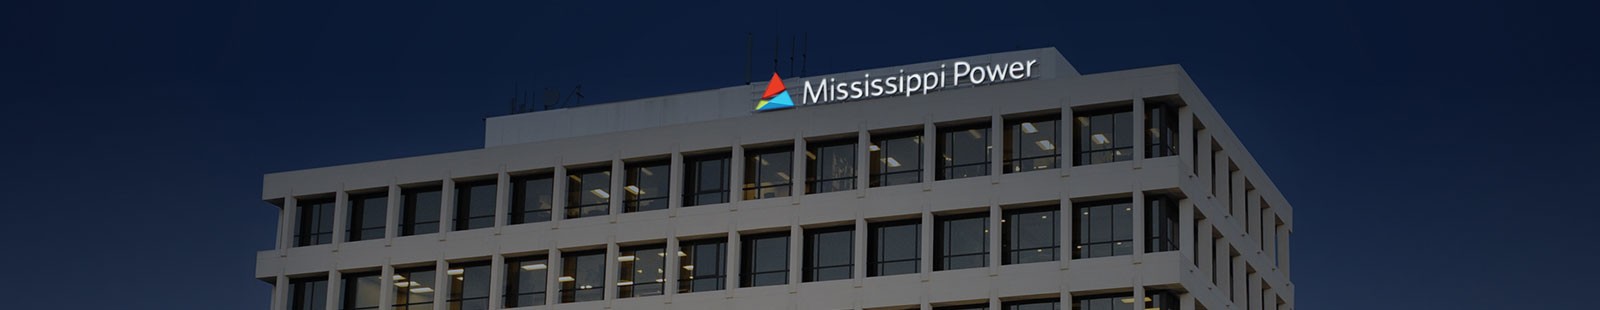 Mississippi Power building